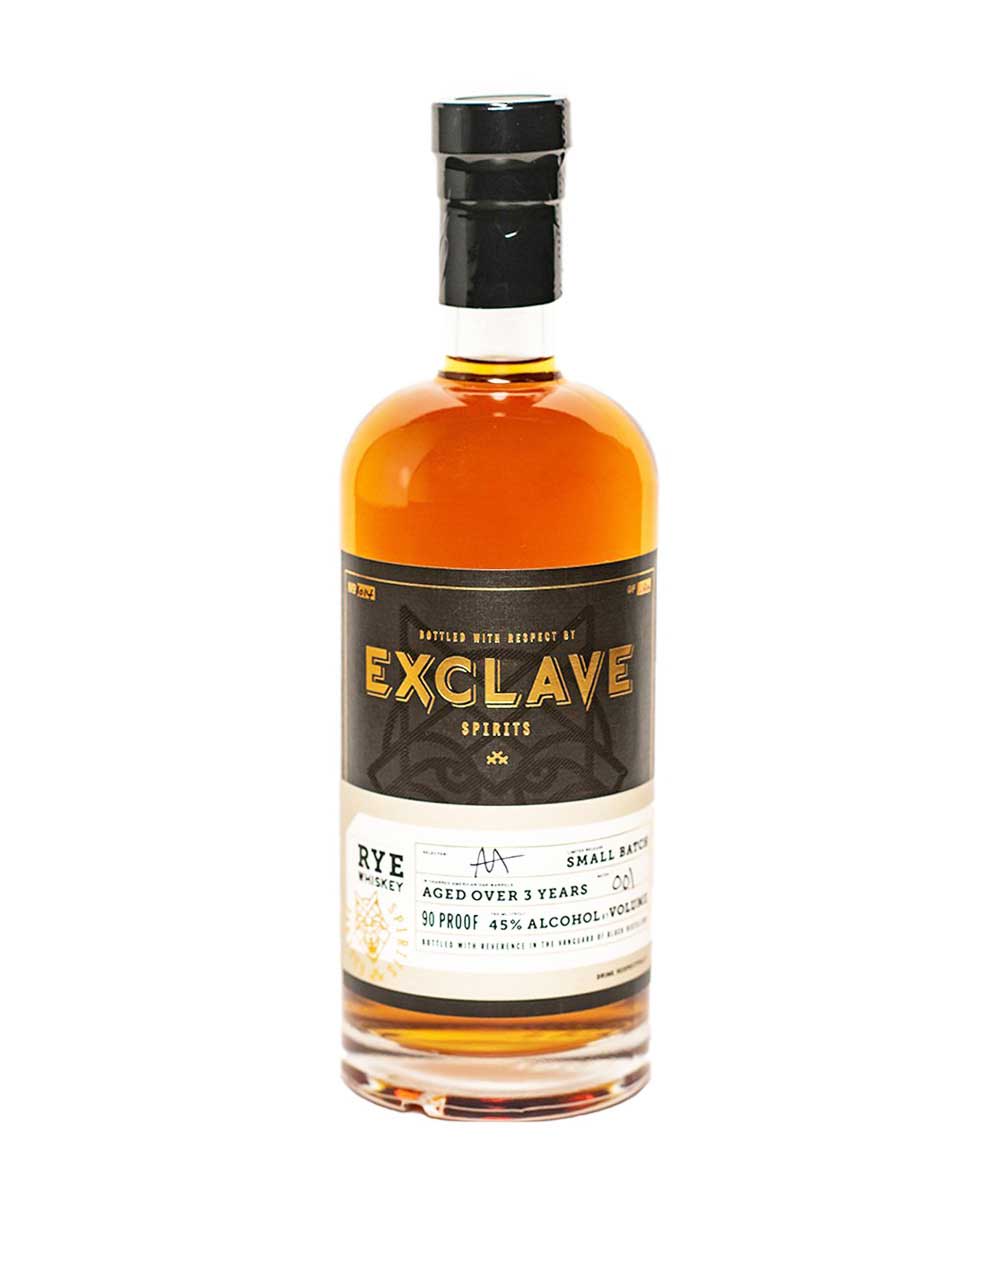 The Macallan Enigma Single Malt Scotch Whisky